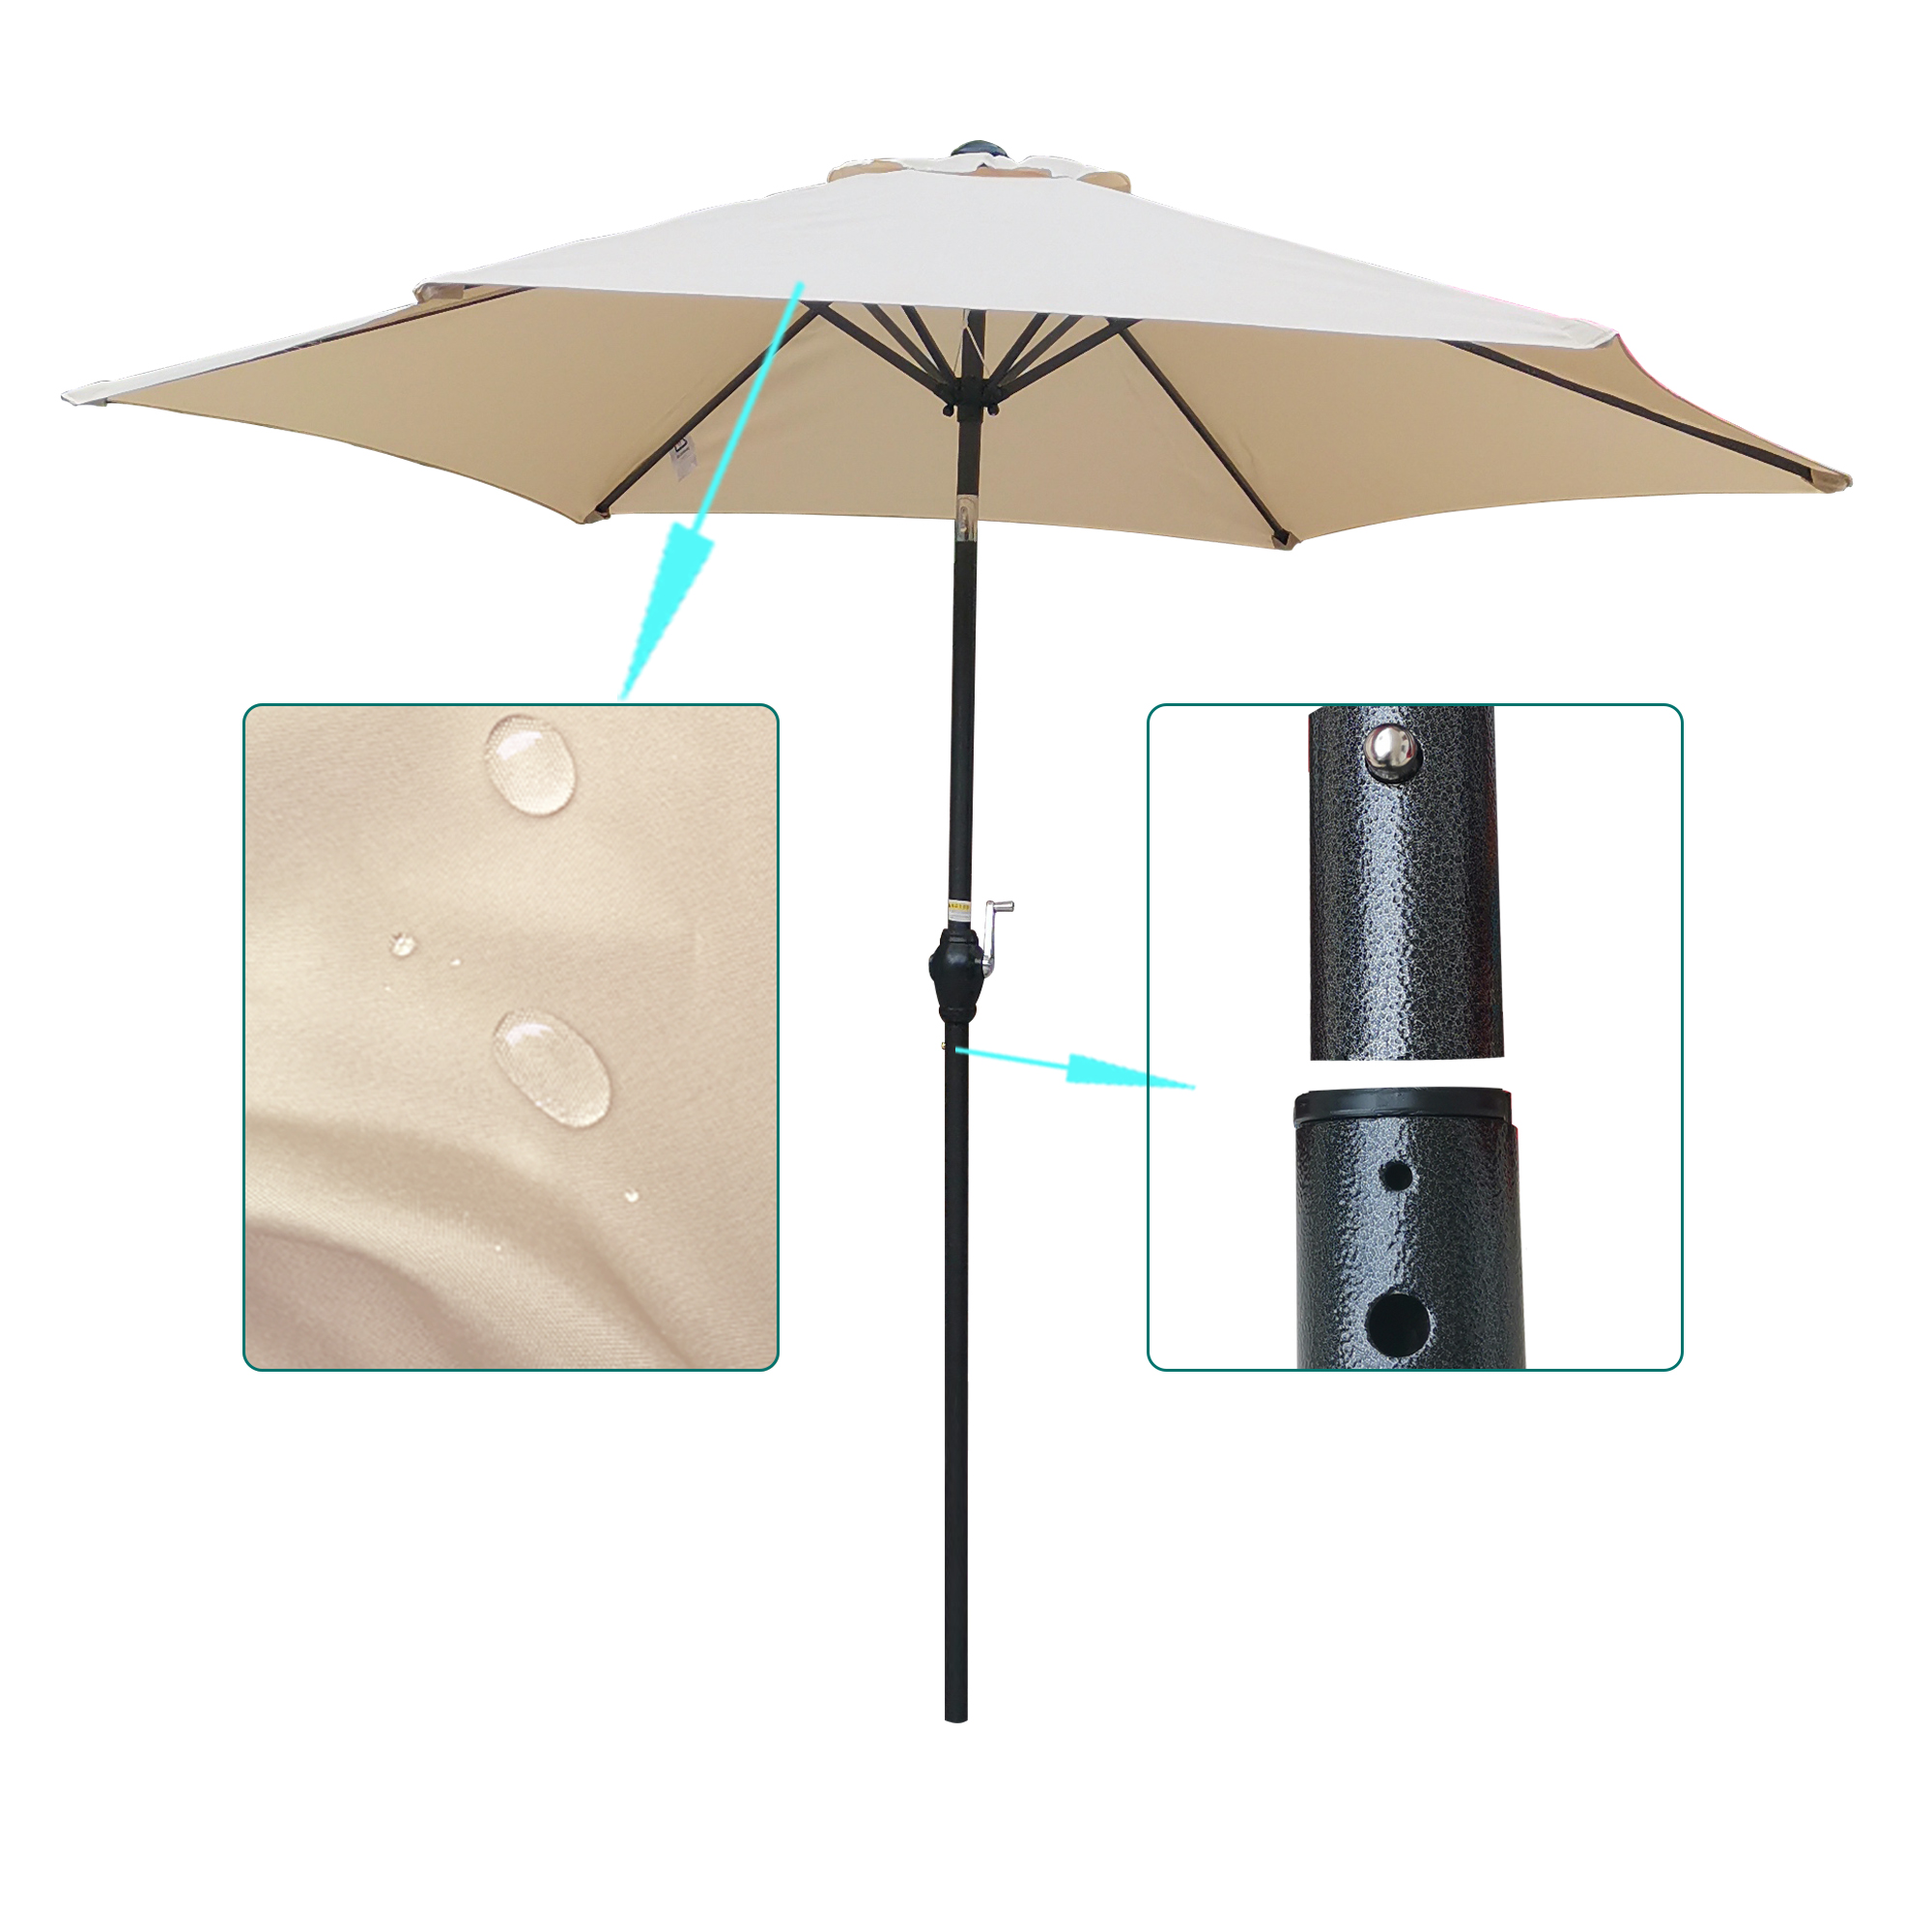 Patio Umbrella,DFITO 9 Ft Outdoor Umbrell , Weather-Resistant Outdoor Patio Umbrella for Table, Heavy-Duty Offset Patio Umbrella for Patio Backyard Outside, Waterproof, Tan, DJ223 - image 4 of 7